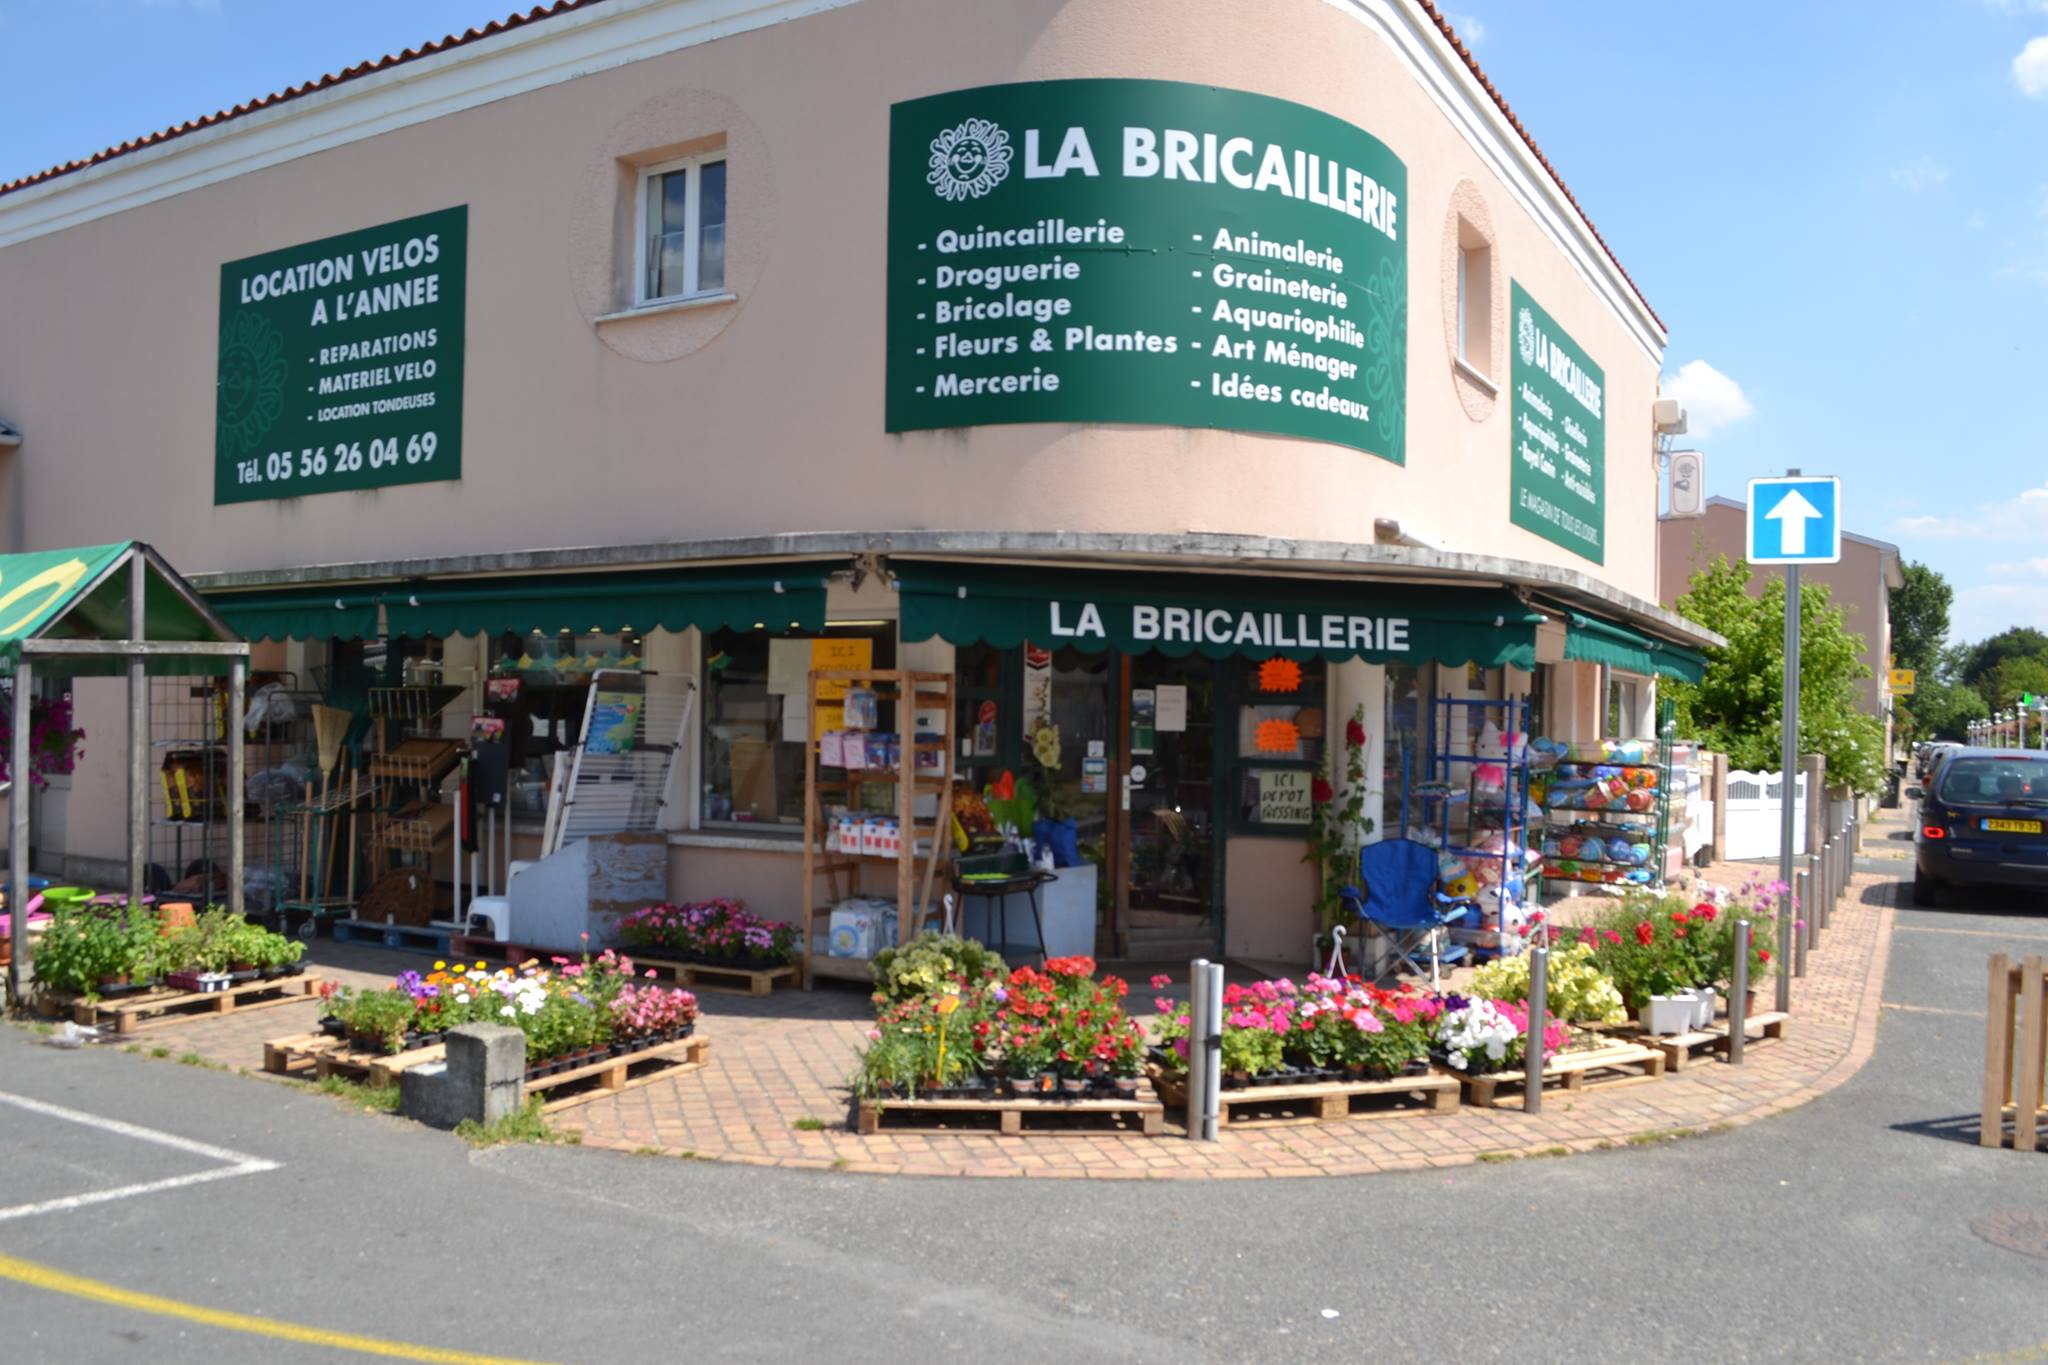 Location de vélos - La Bricaillerie null France null null null null